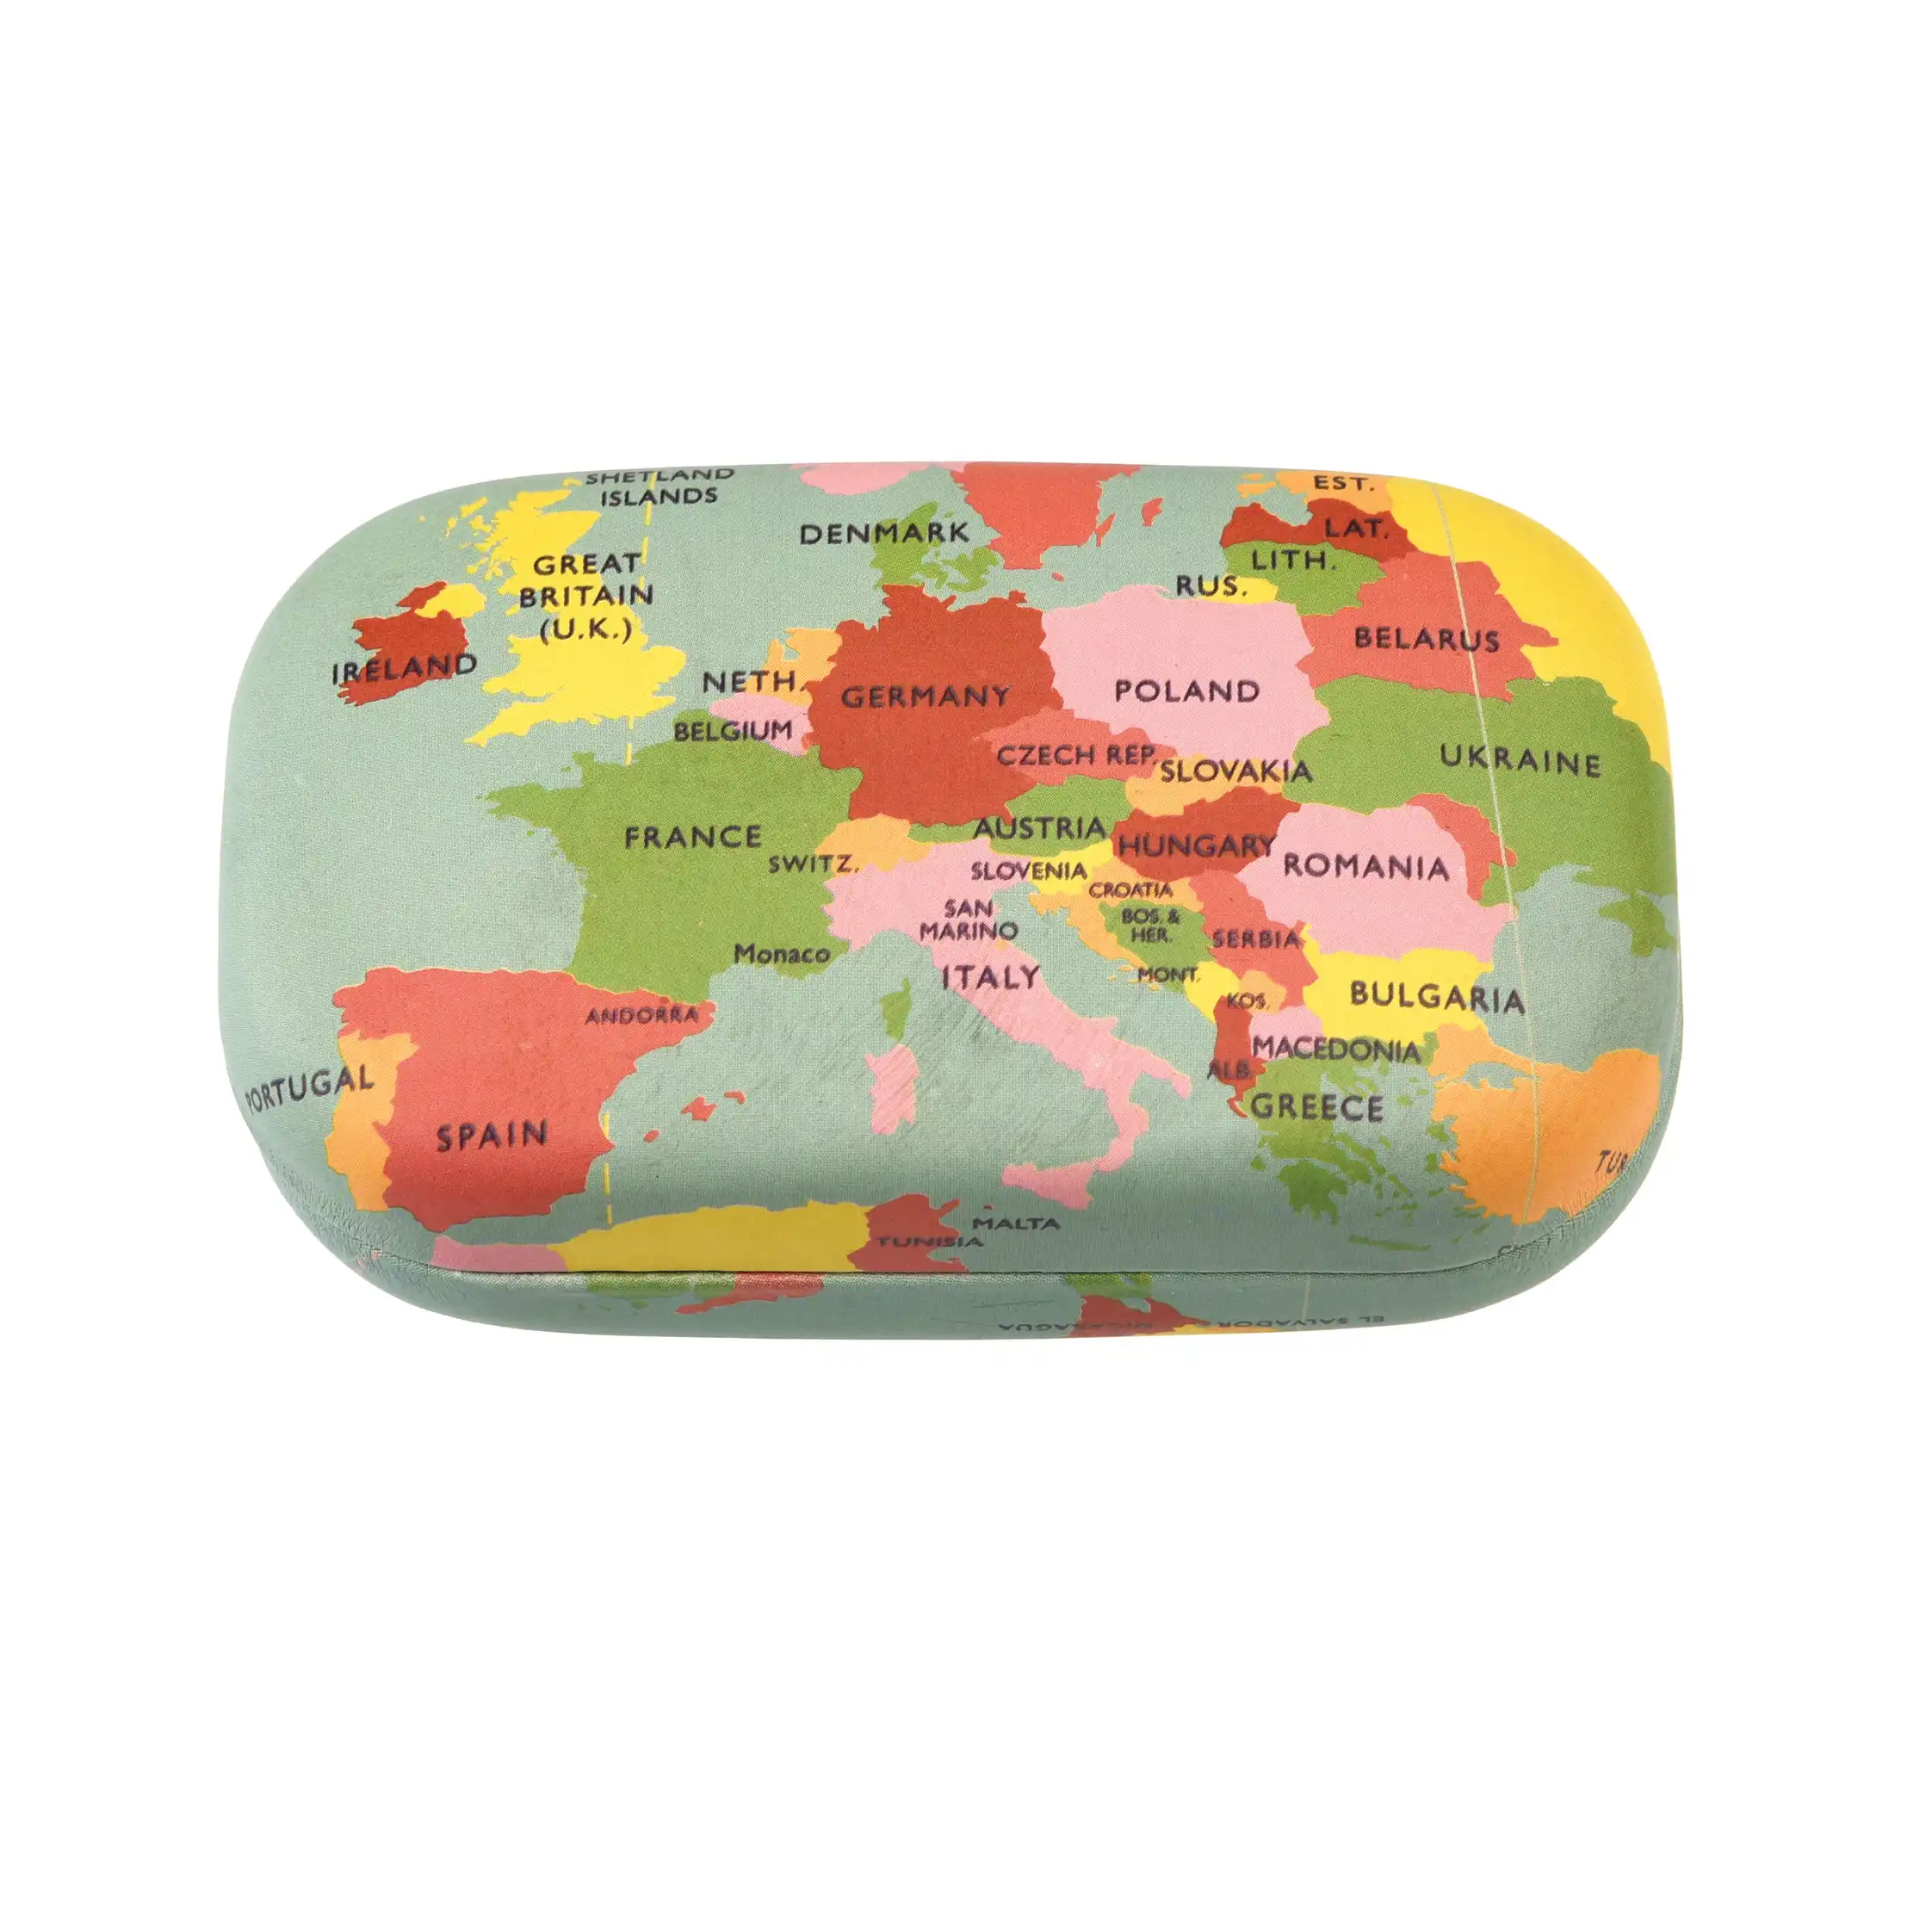 mini travel case - world map